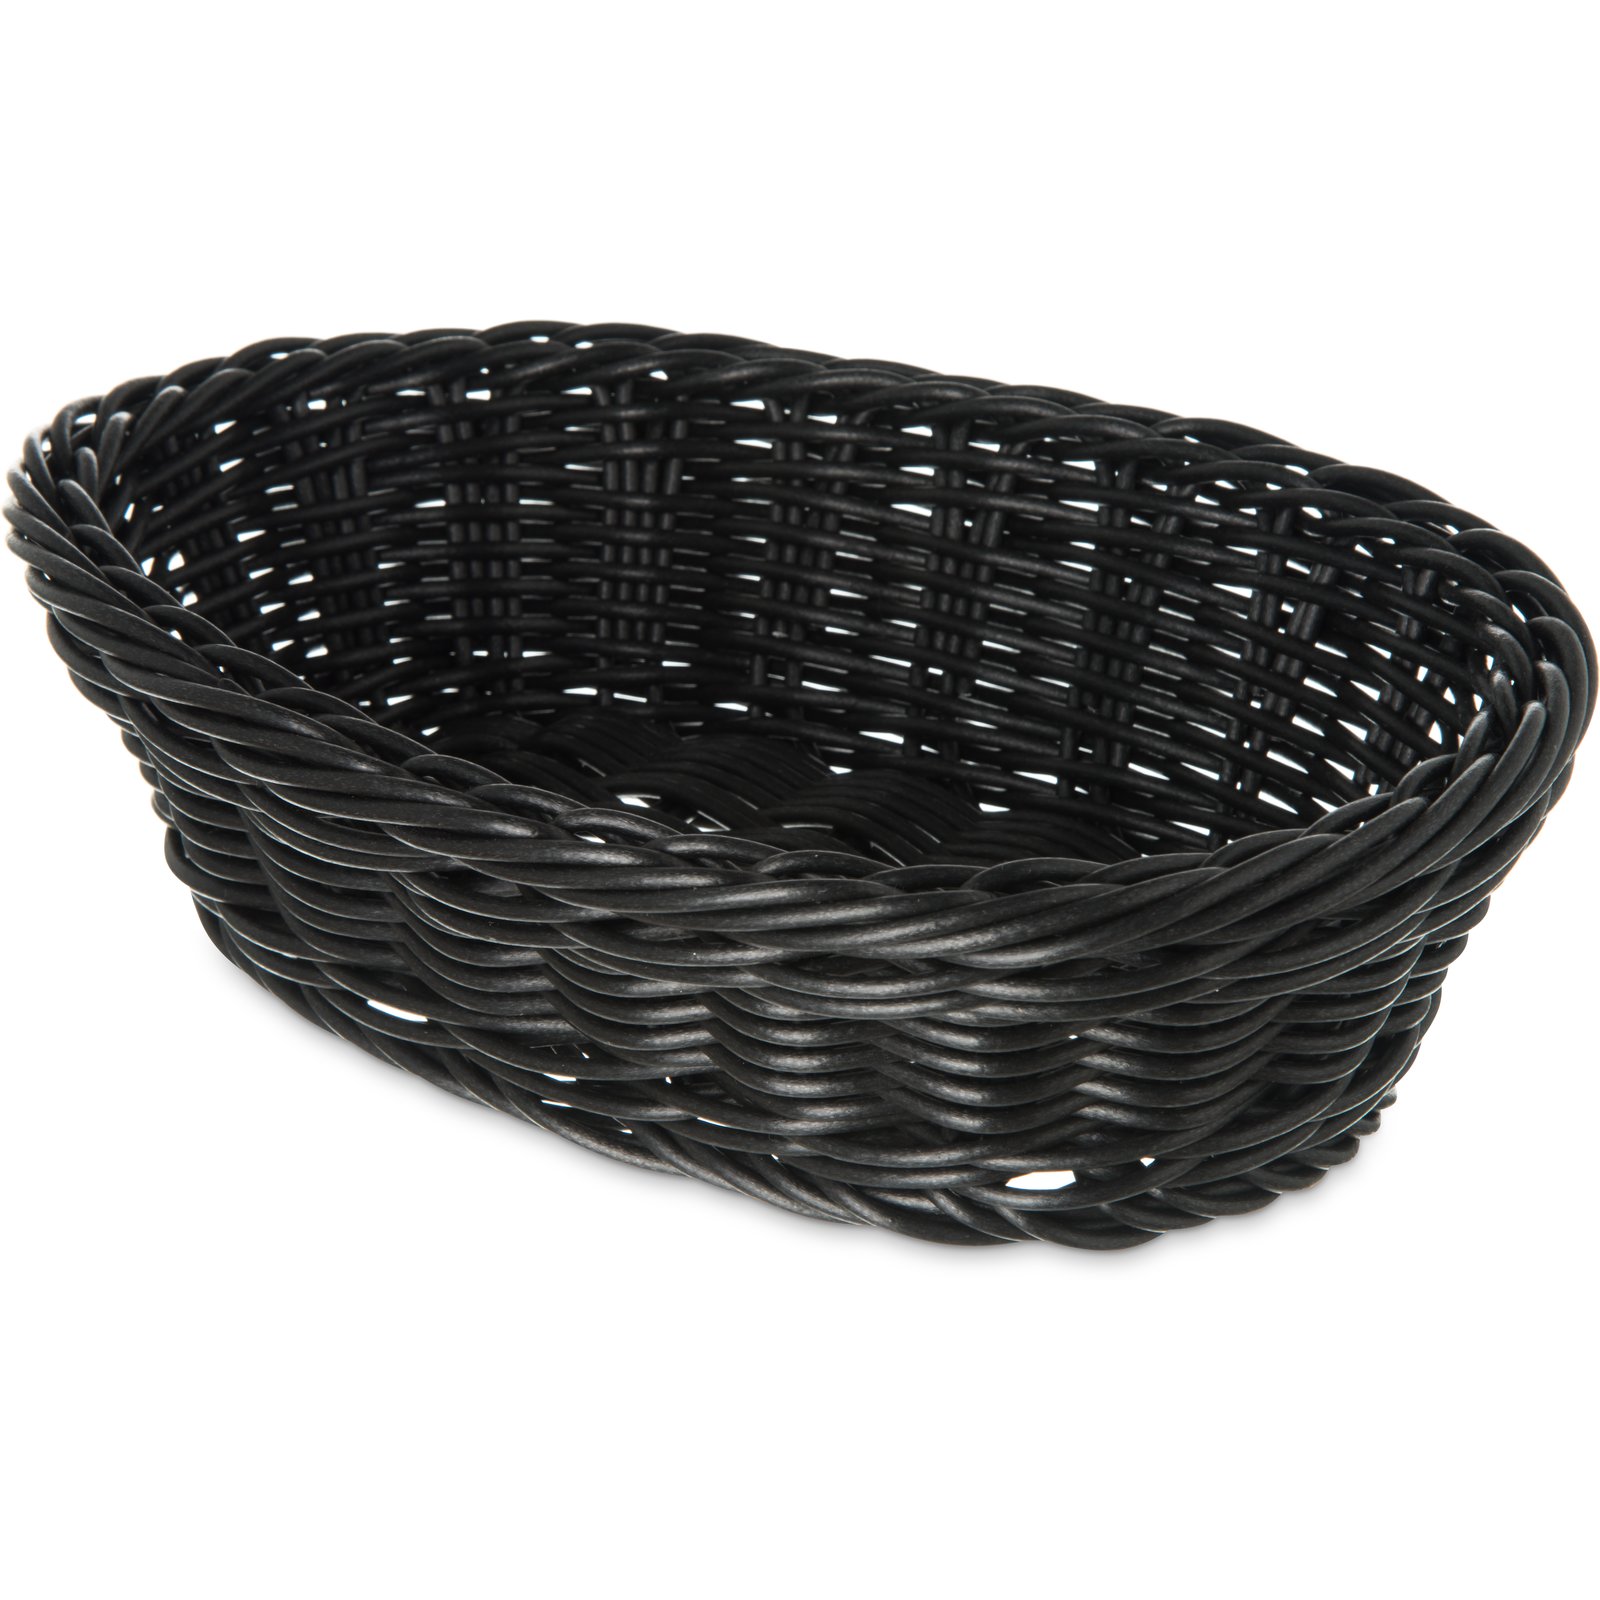 655003 - Woven Baskets Oval Basket Small 9" - Black ...
